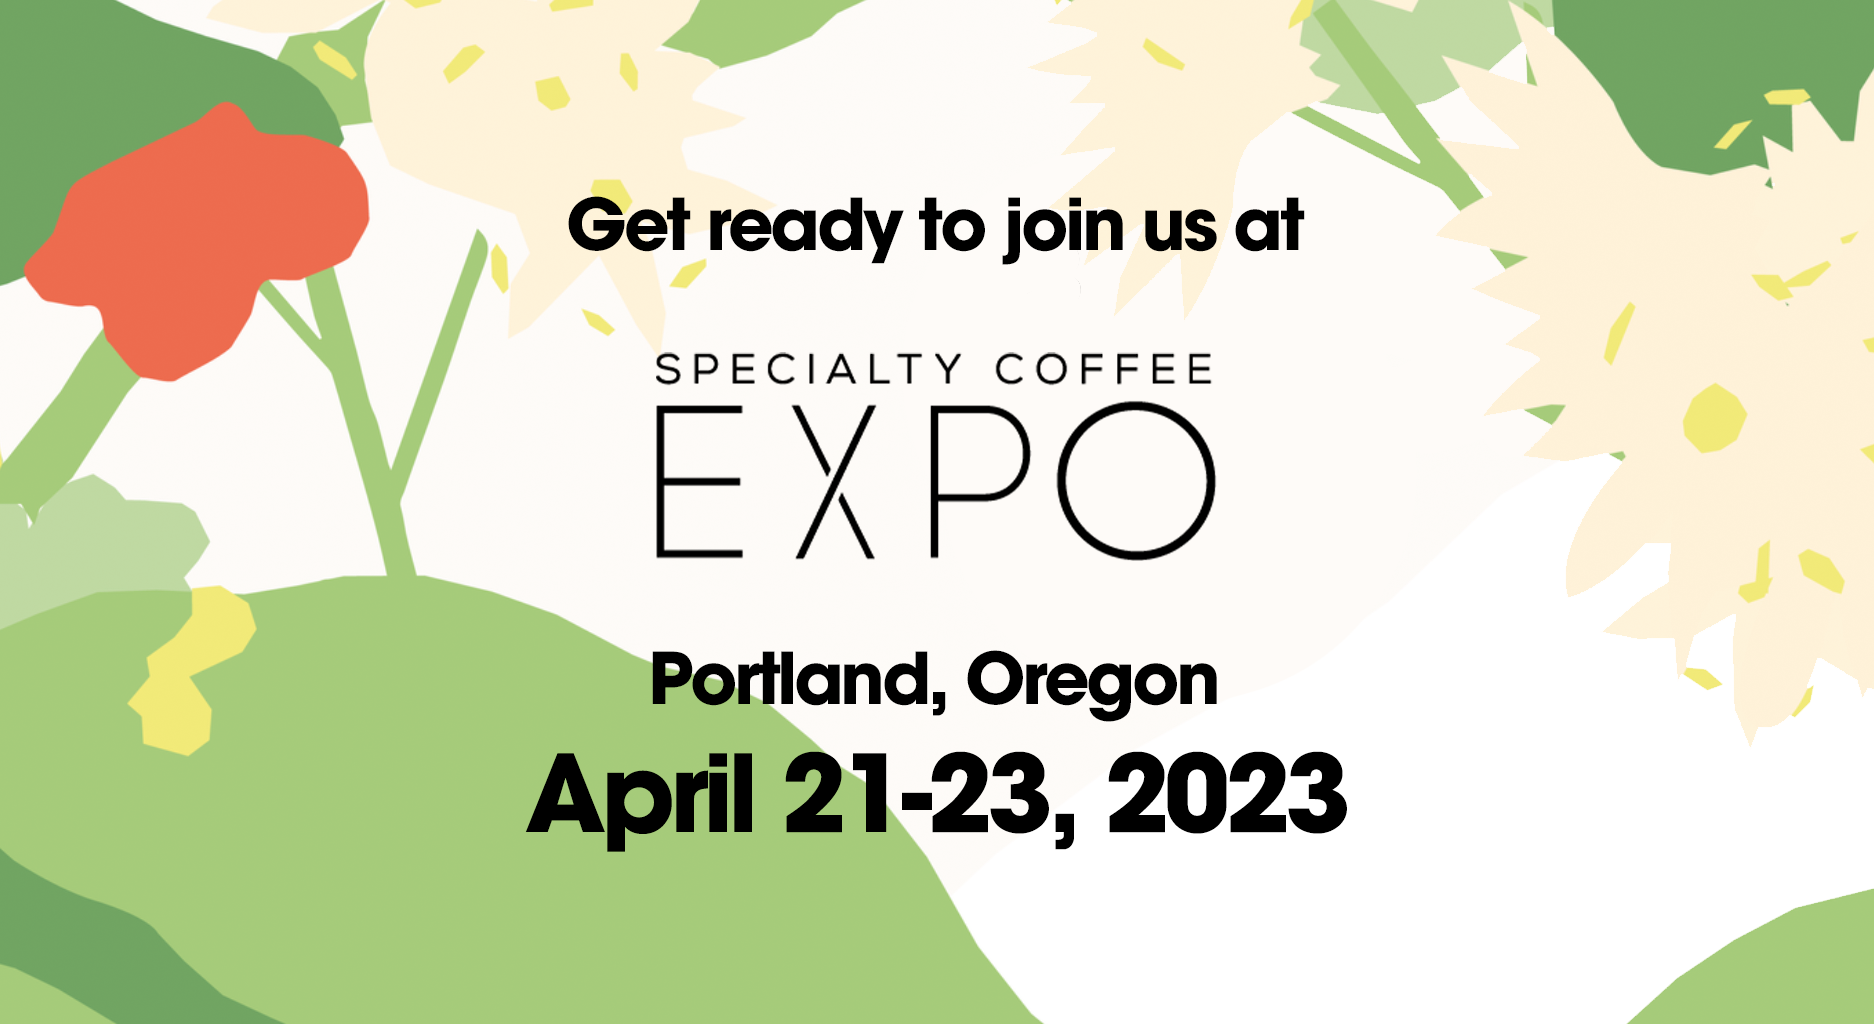 SCA Expo Portland 2023 Visions Espresso